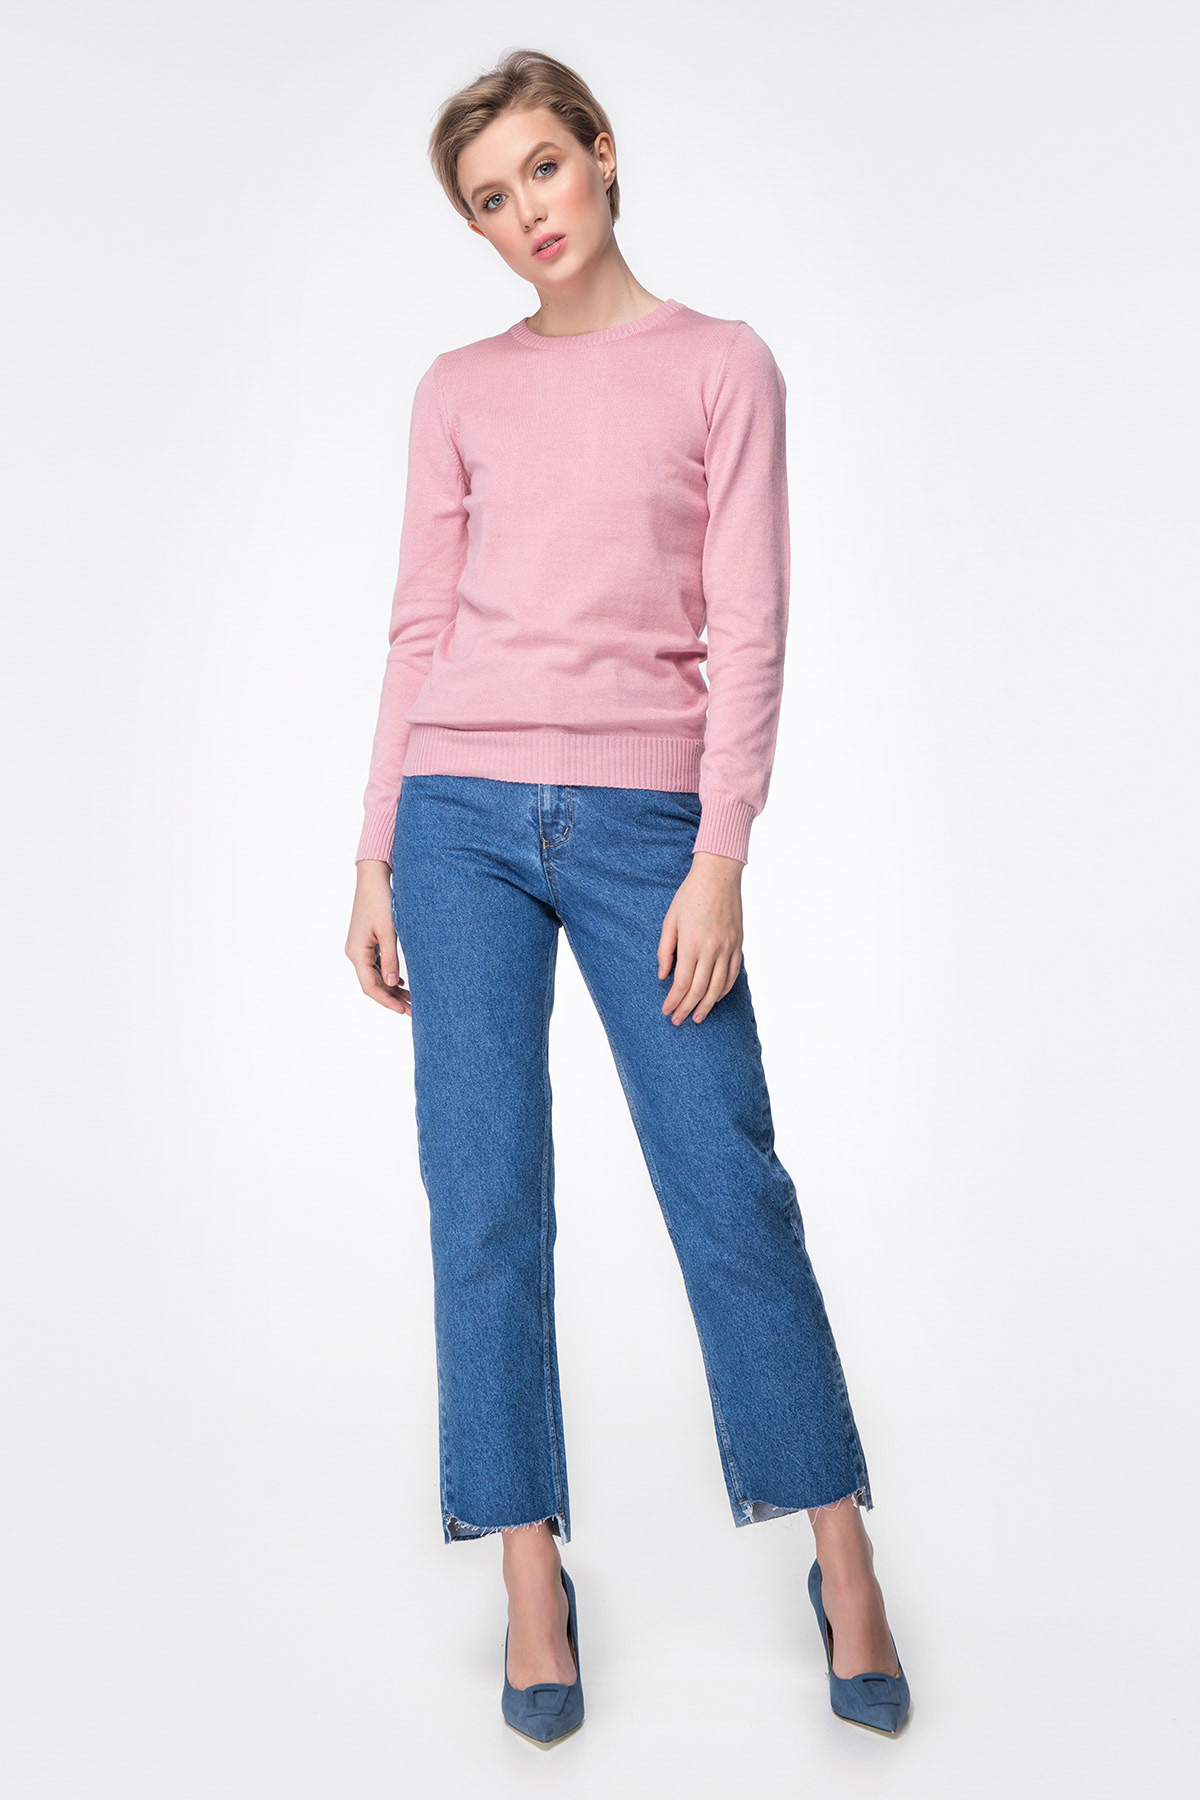 Pink knit jumper, photo 2